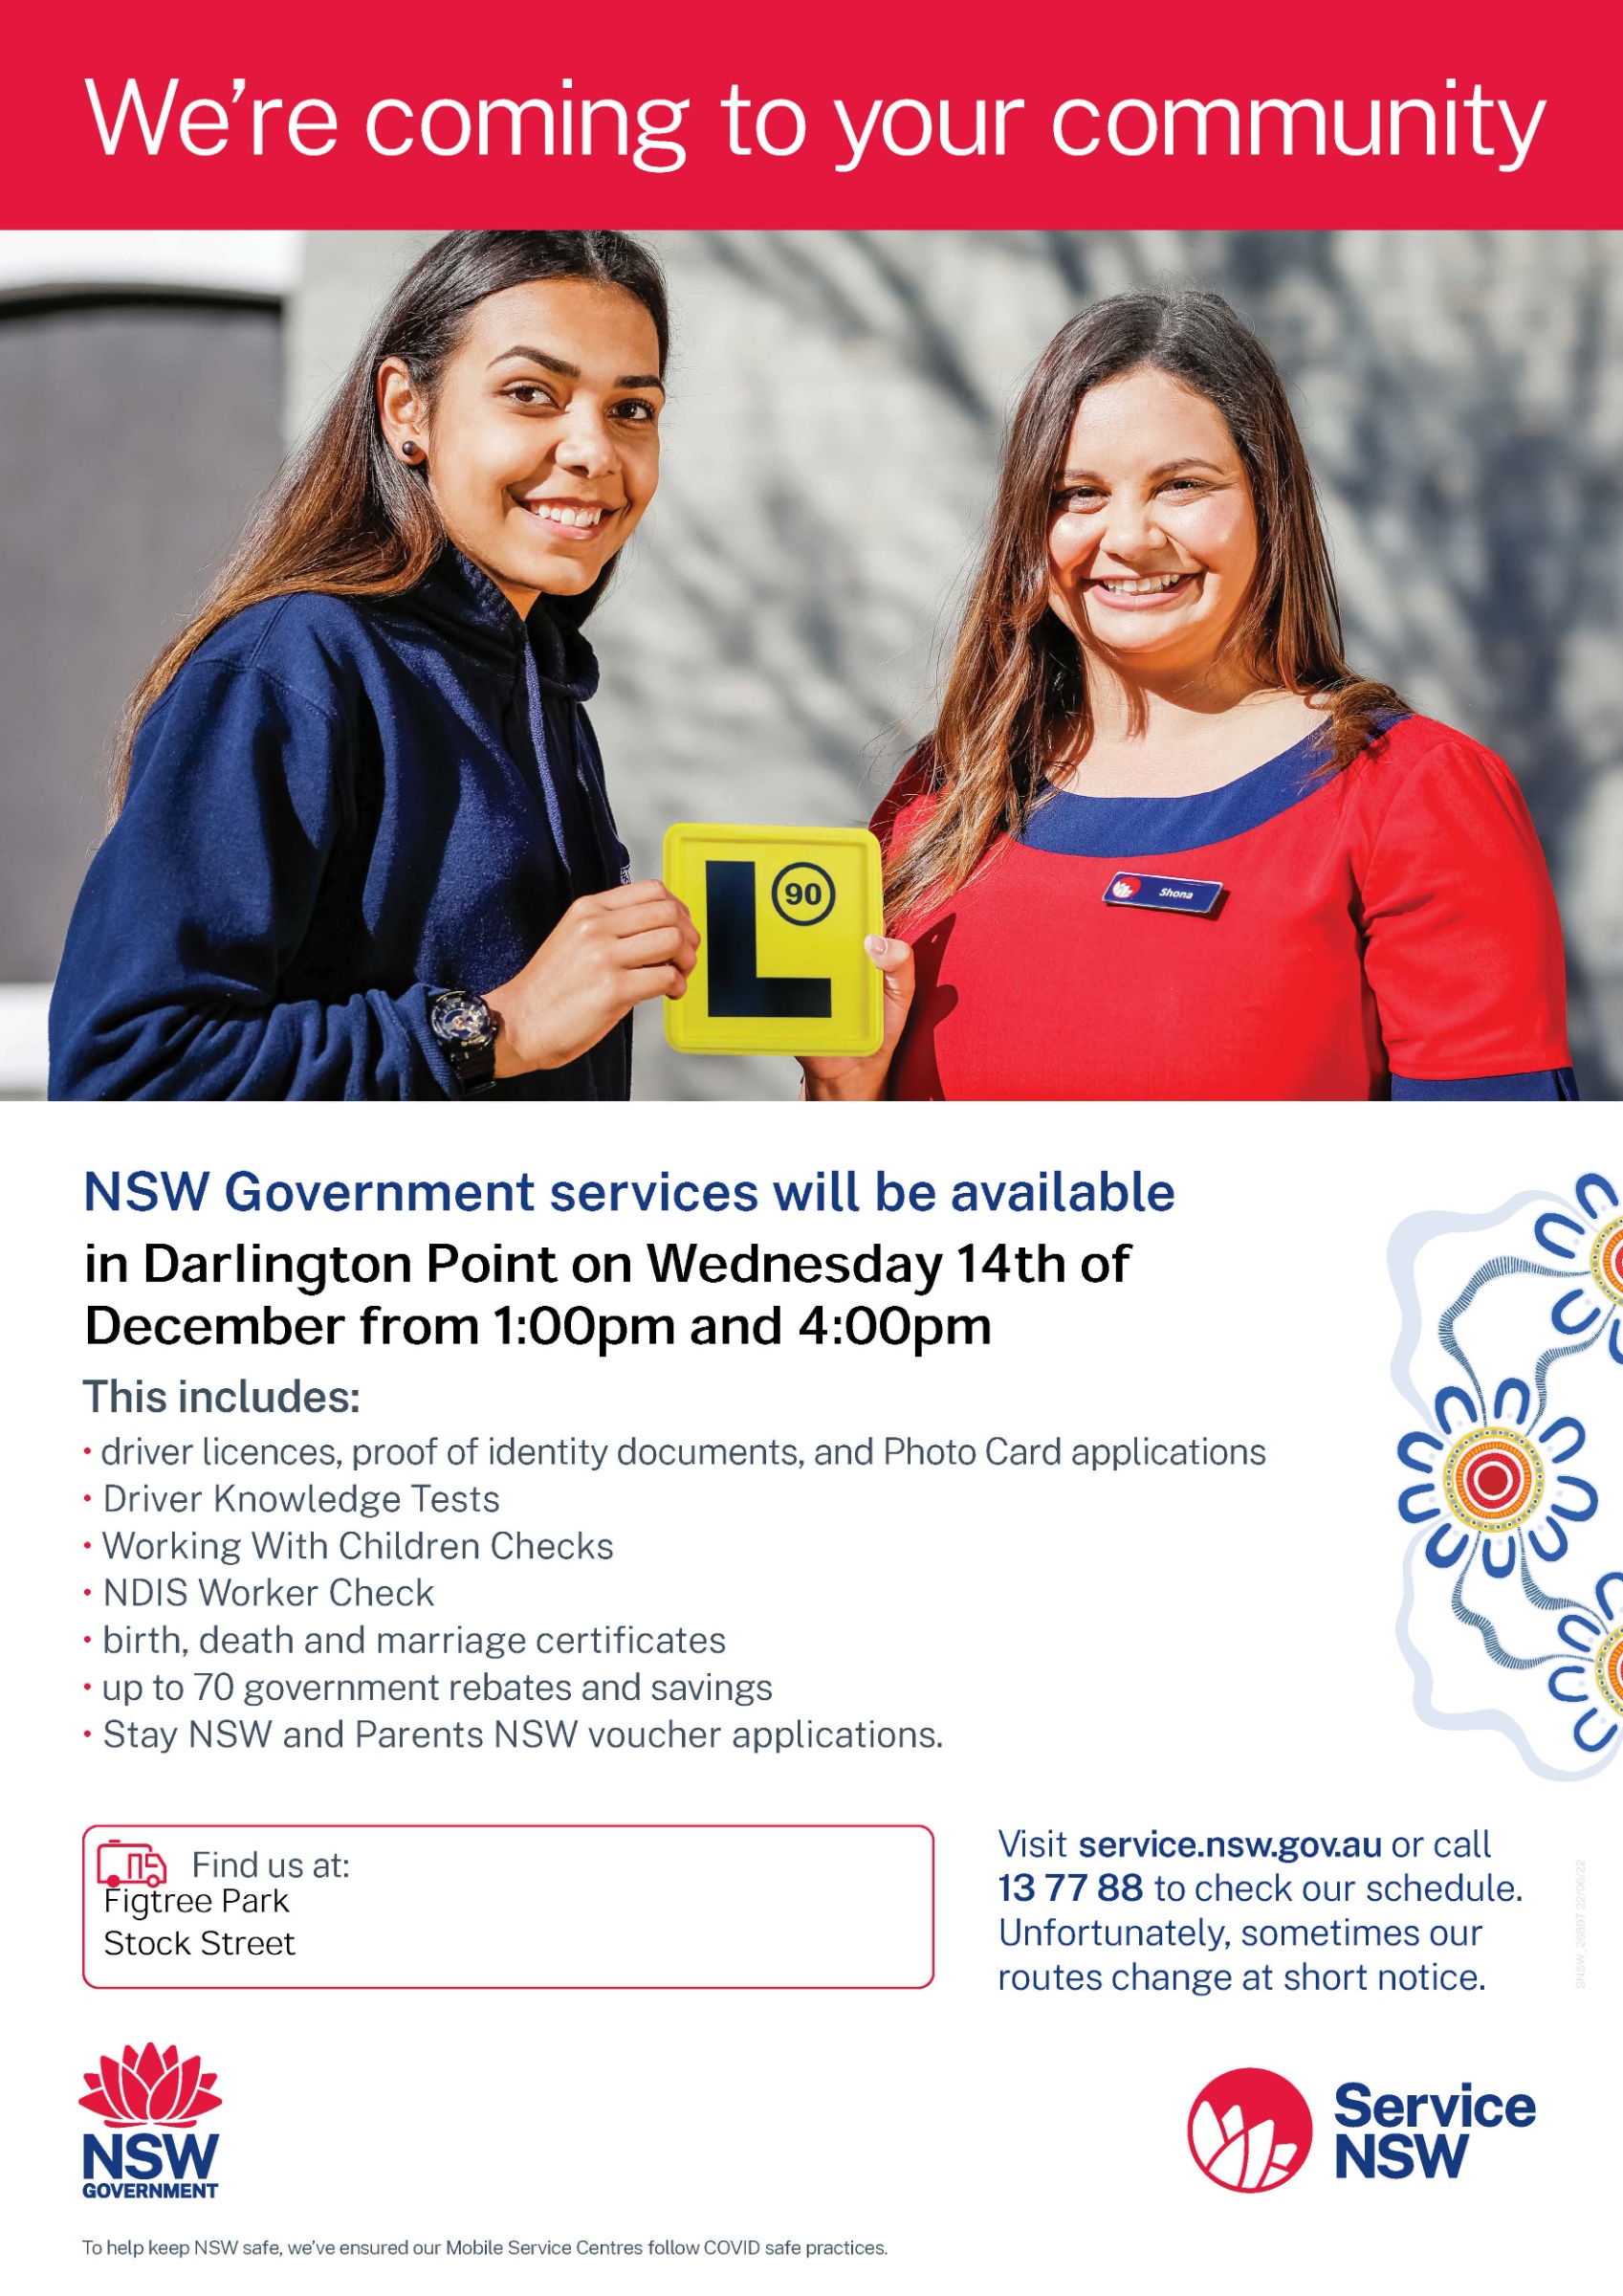 Service NSW - Darlington Point Visit